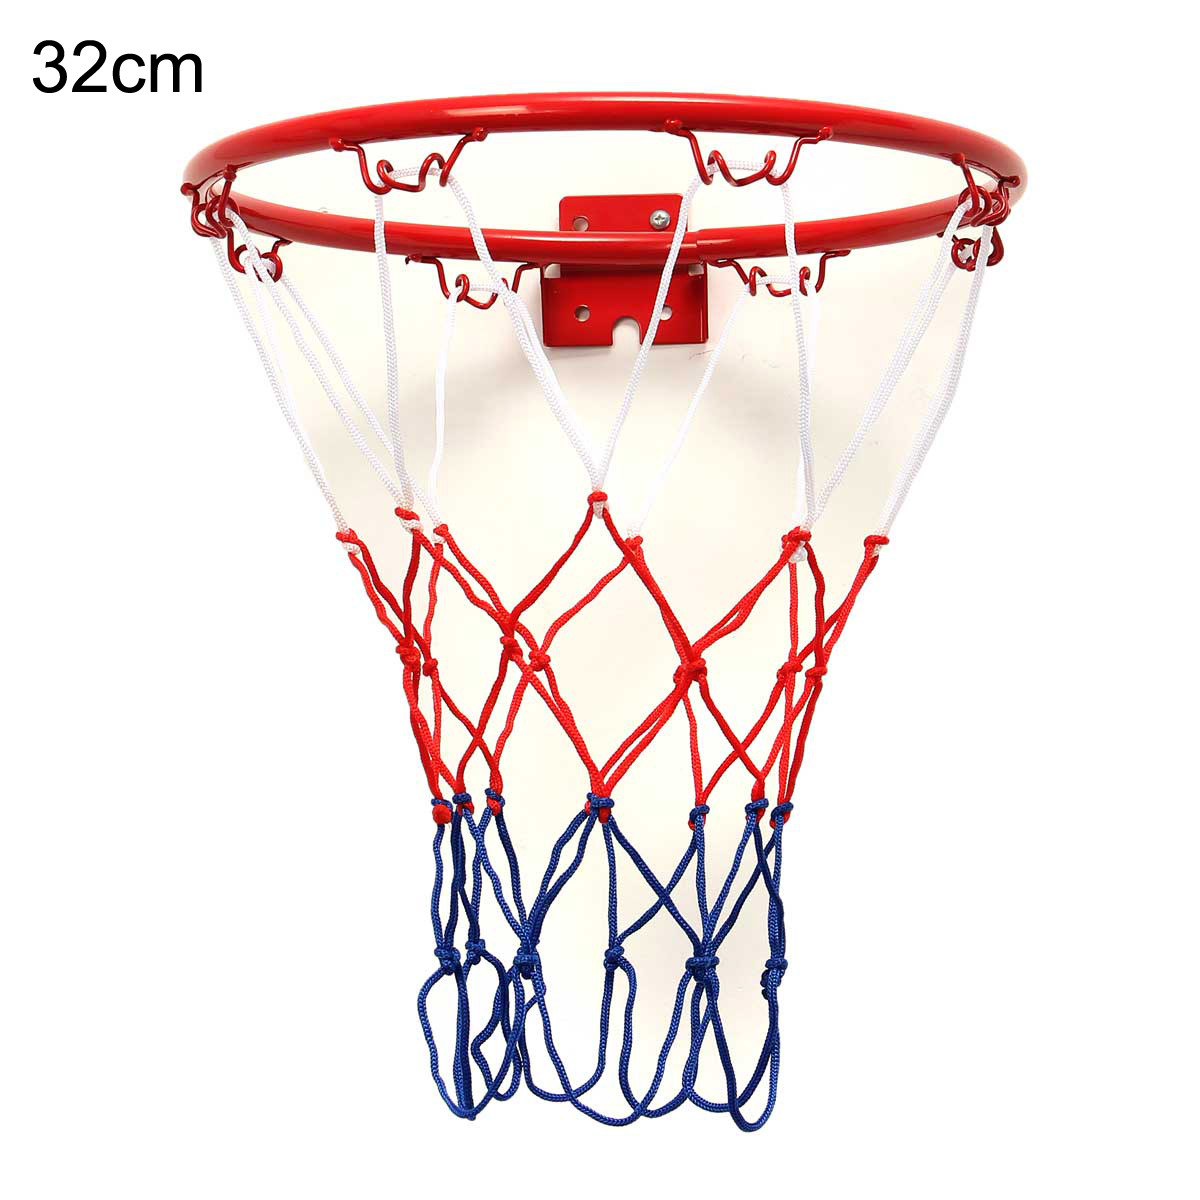 Wall-Mounted-Hanging-Basketball-Goal-Hoop-Rim-Metal-Netting-1040840-8